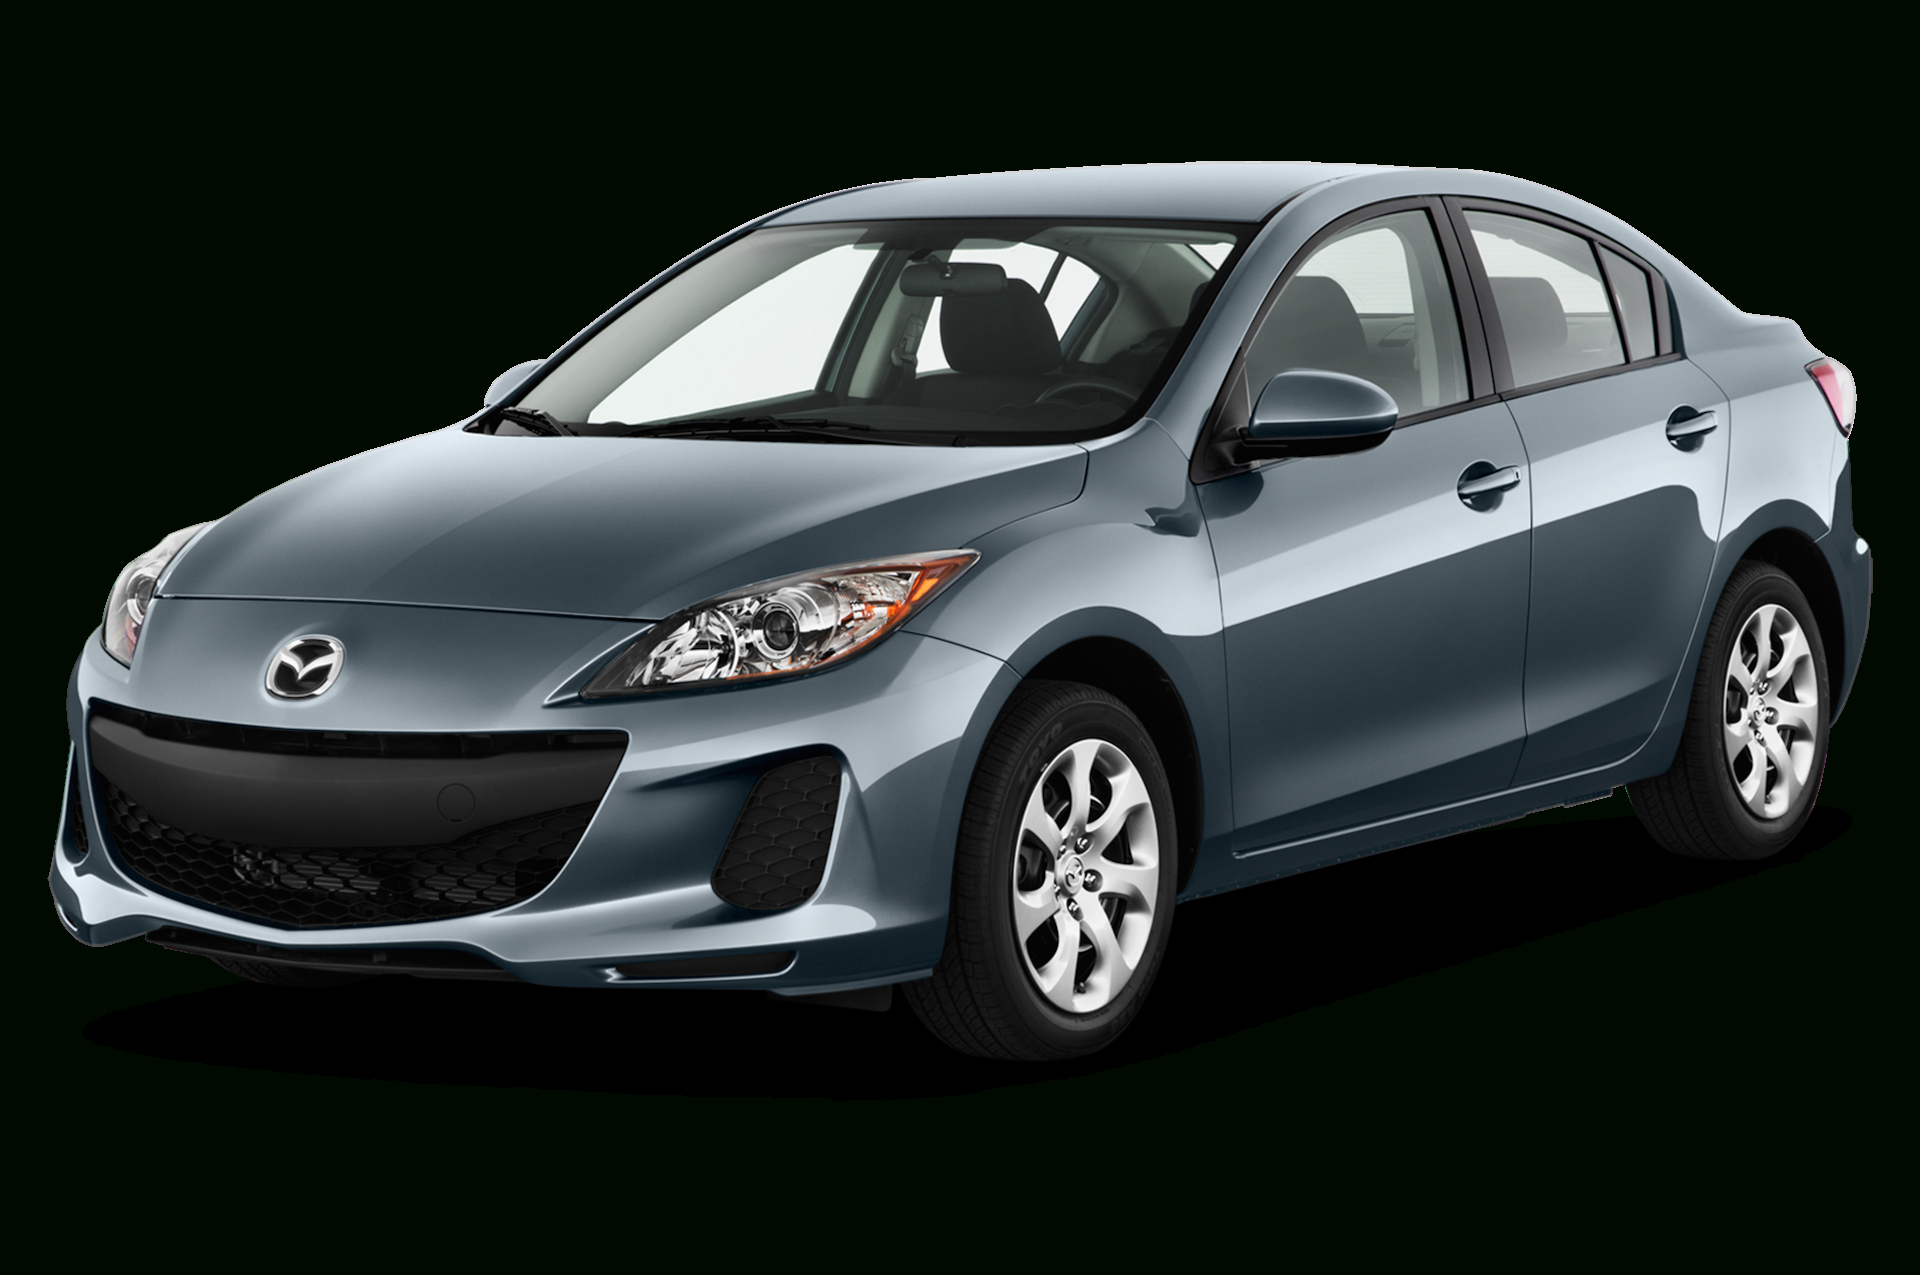 2012 Mazda Mazda3 Prices, Reviews, And Photos - Motortrend intended for Mazda 3 2012 Price